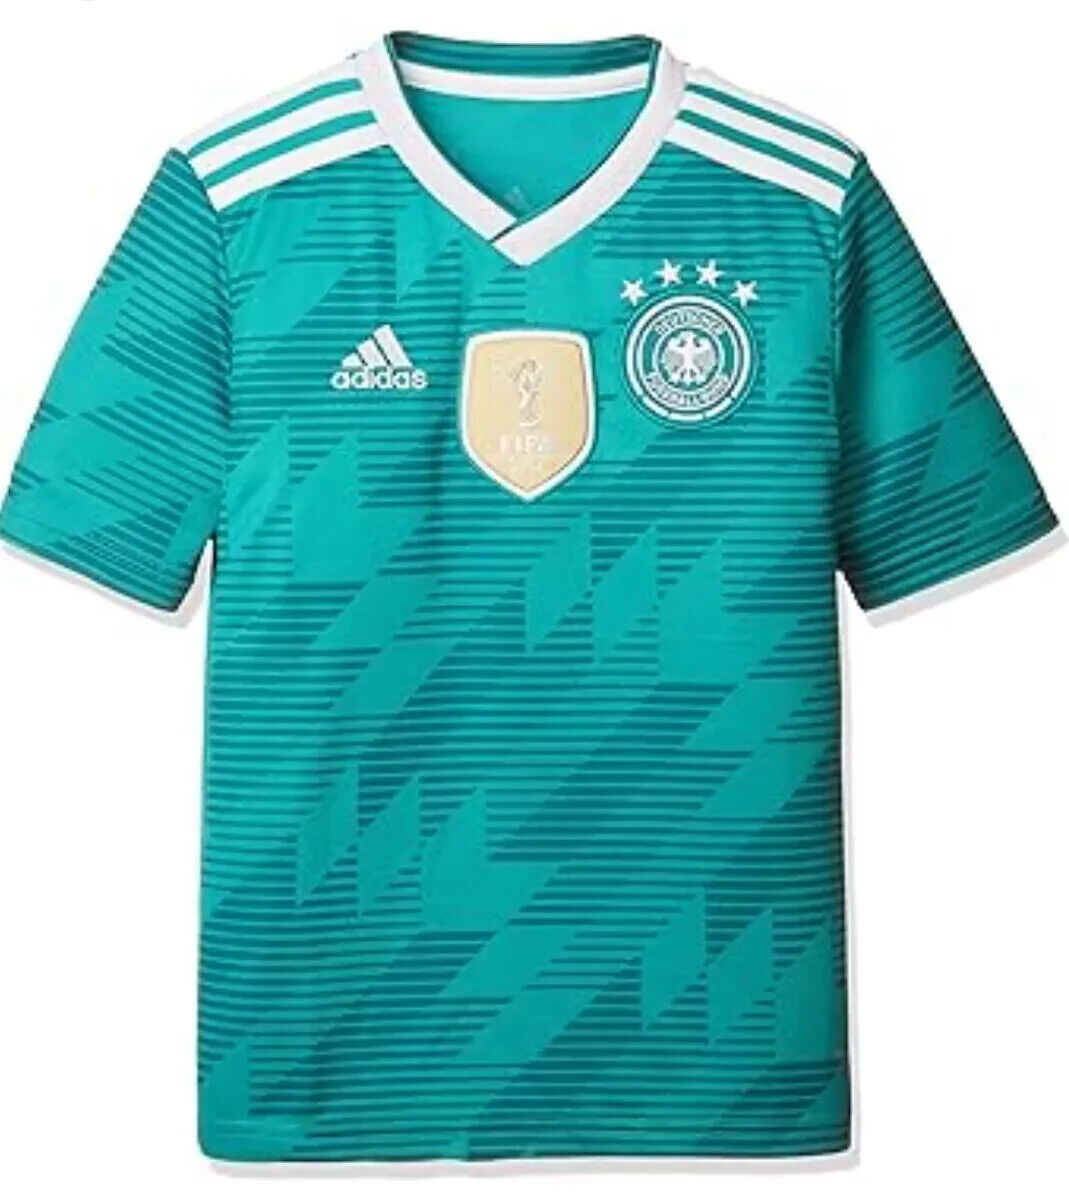 Adidas Germany Football Shirt 2014 Fifa Climacool World Cup Athletic Top Boys XL - $17.81